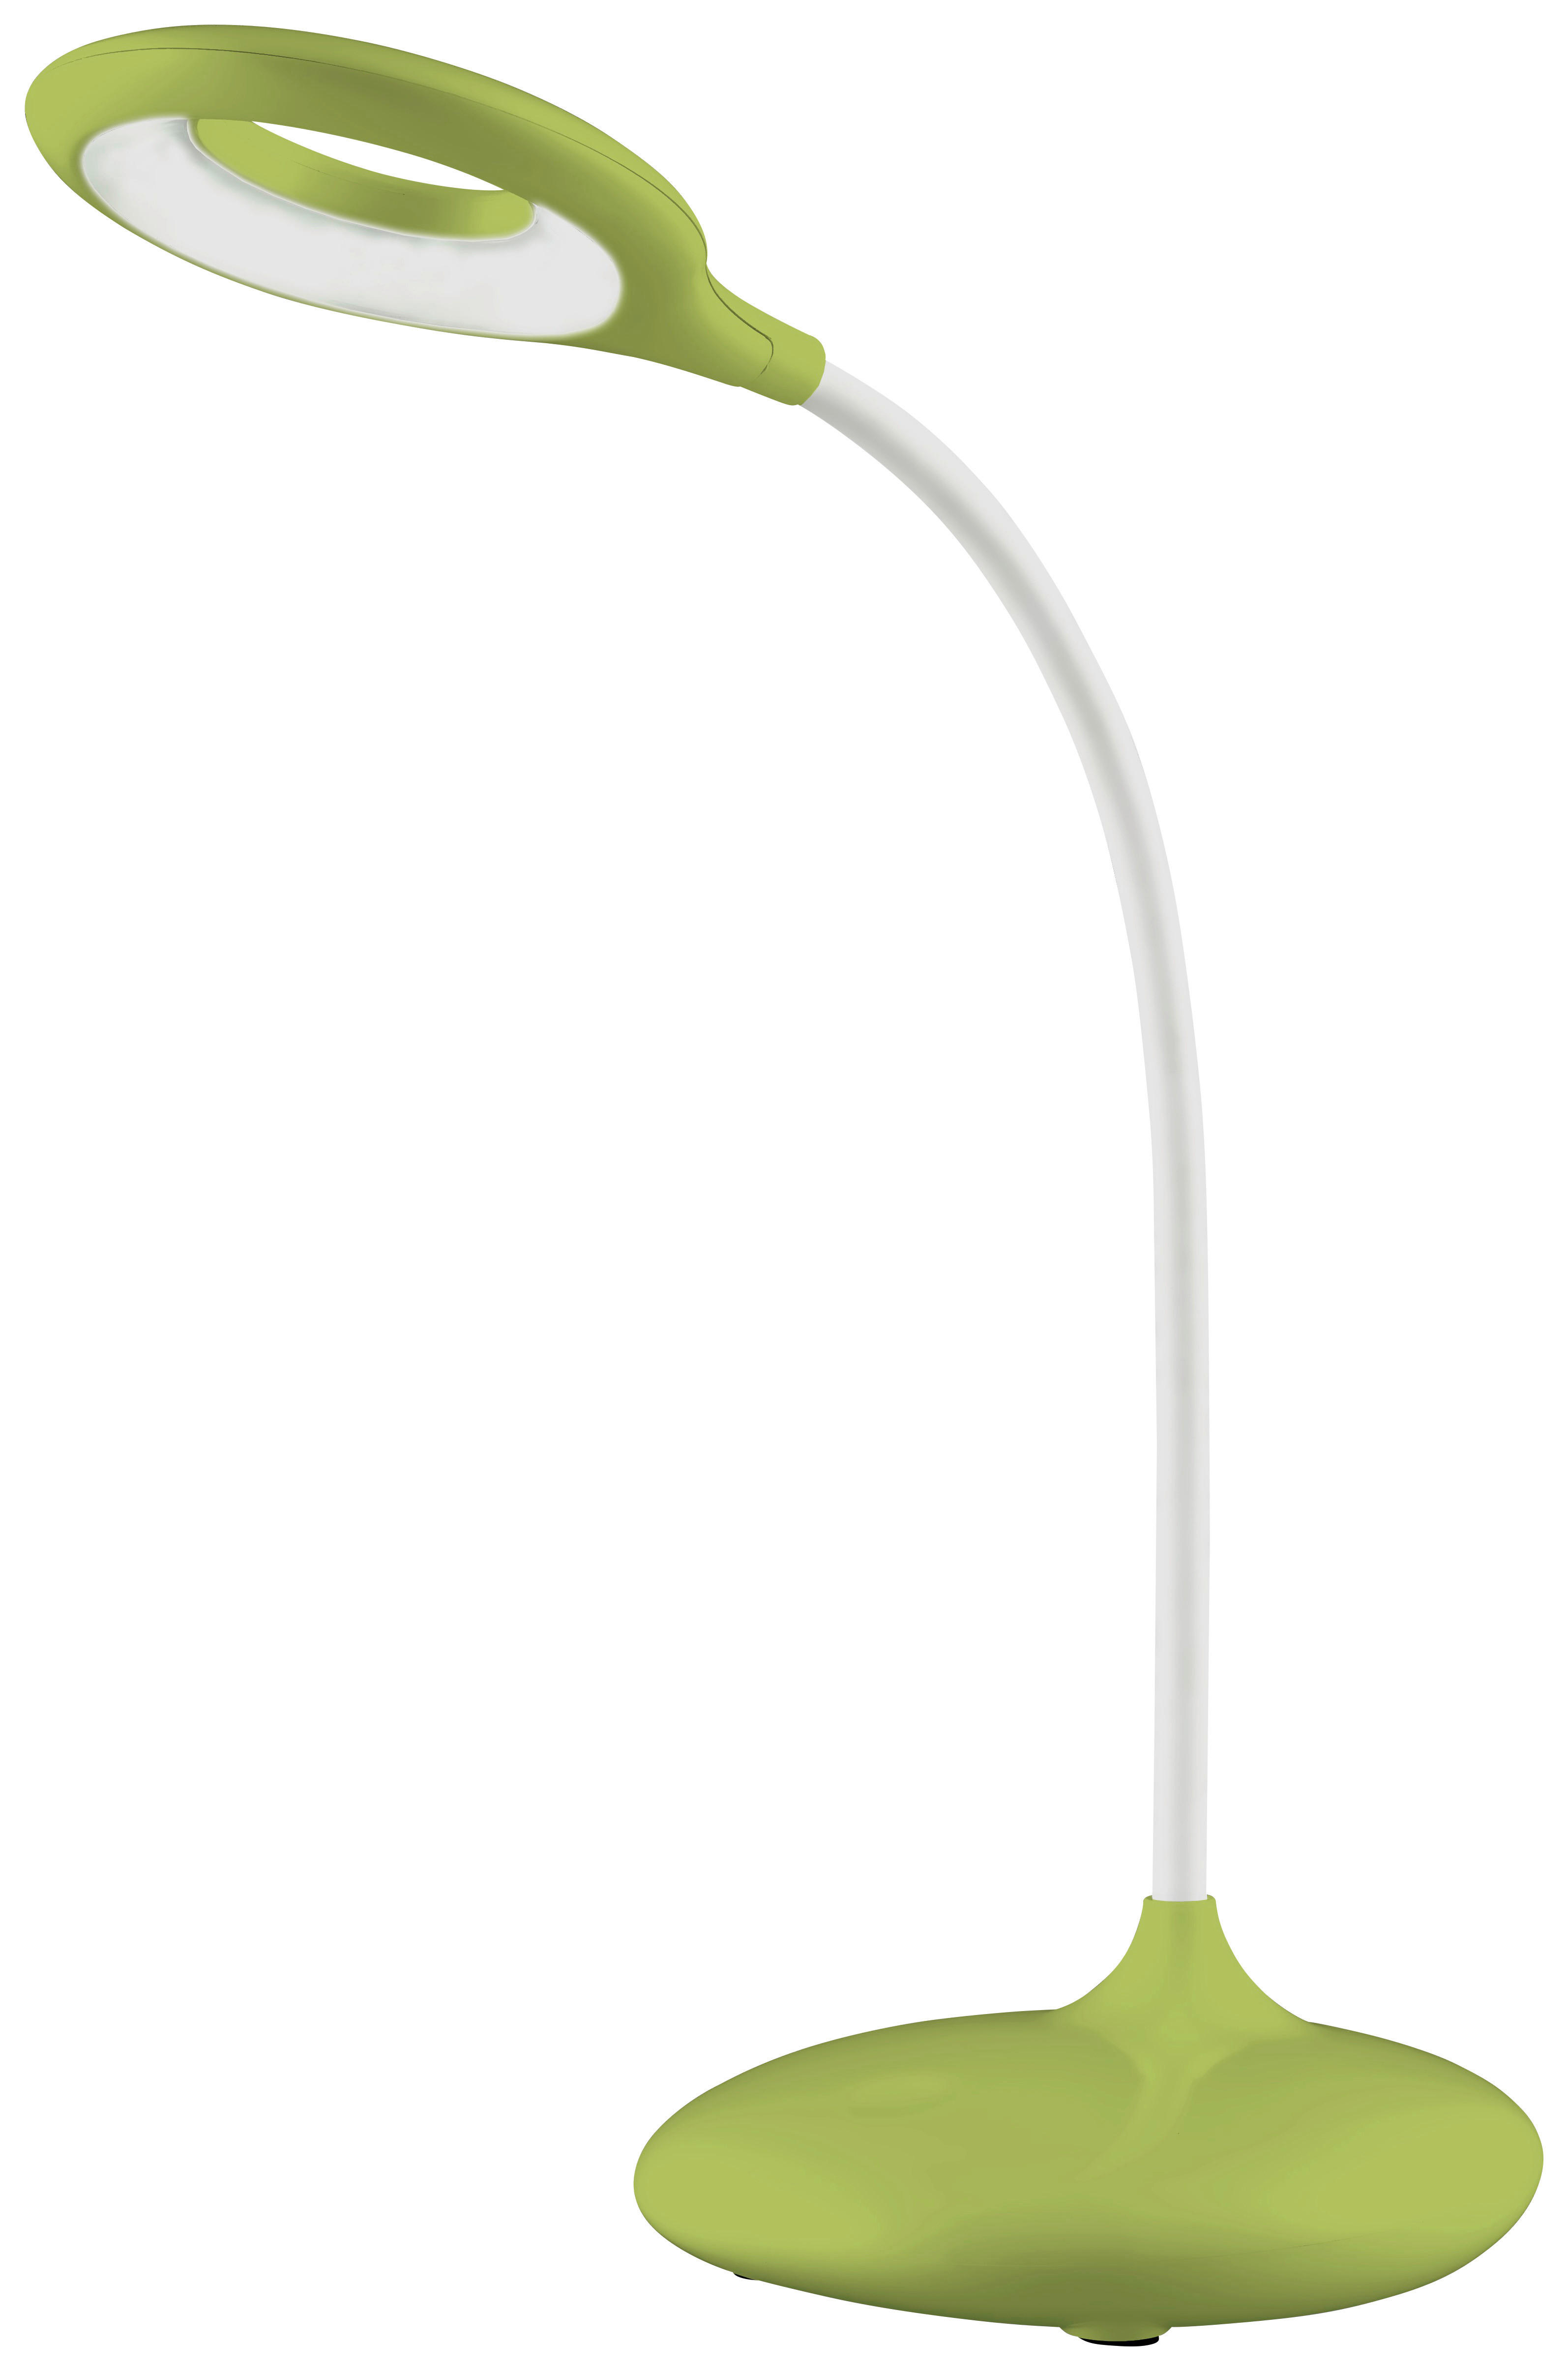 LED-SKRIVBORDSLAMPA   - grön, Trend, plast (41cm) - Best Price